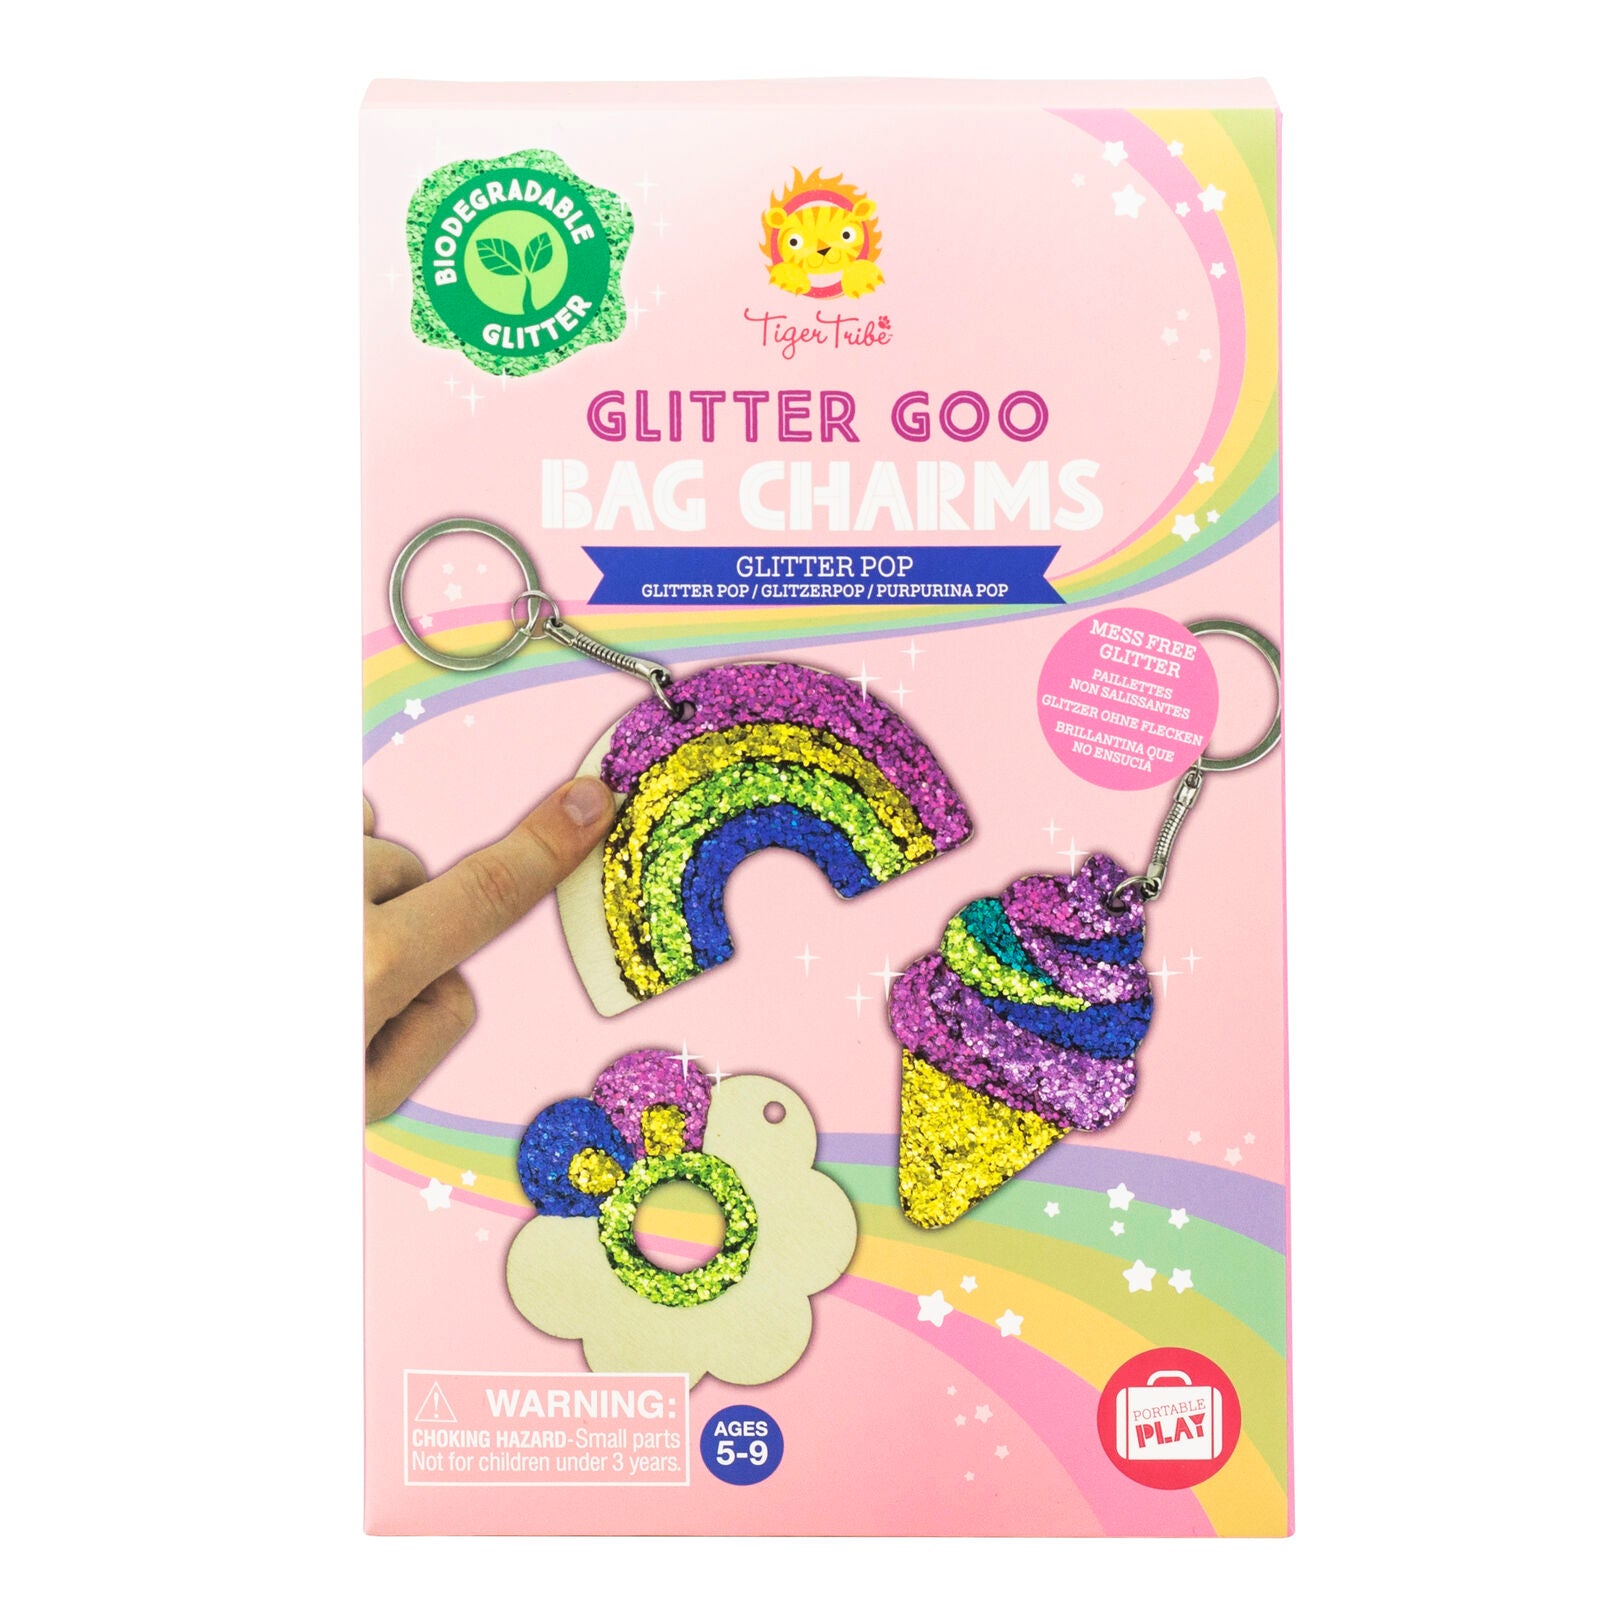 Tiger Tribe Glitter Goo Bag Charms – Glitter Pop